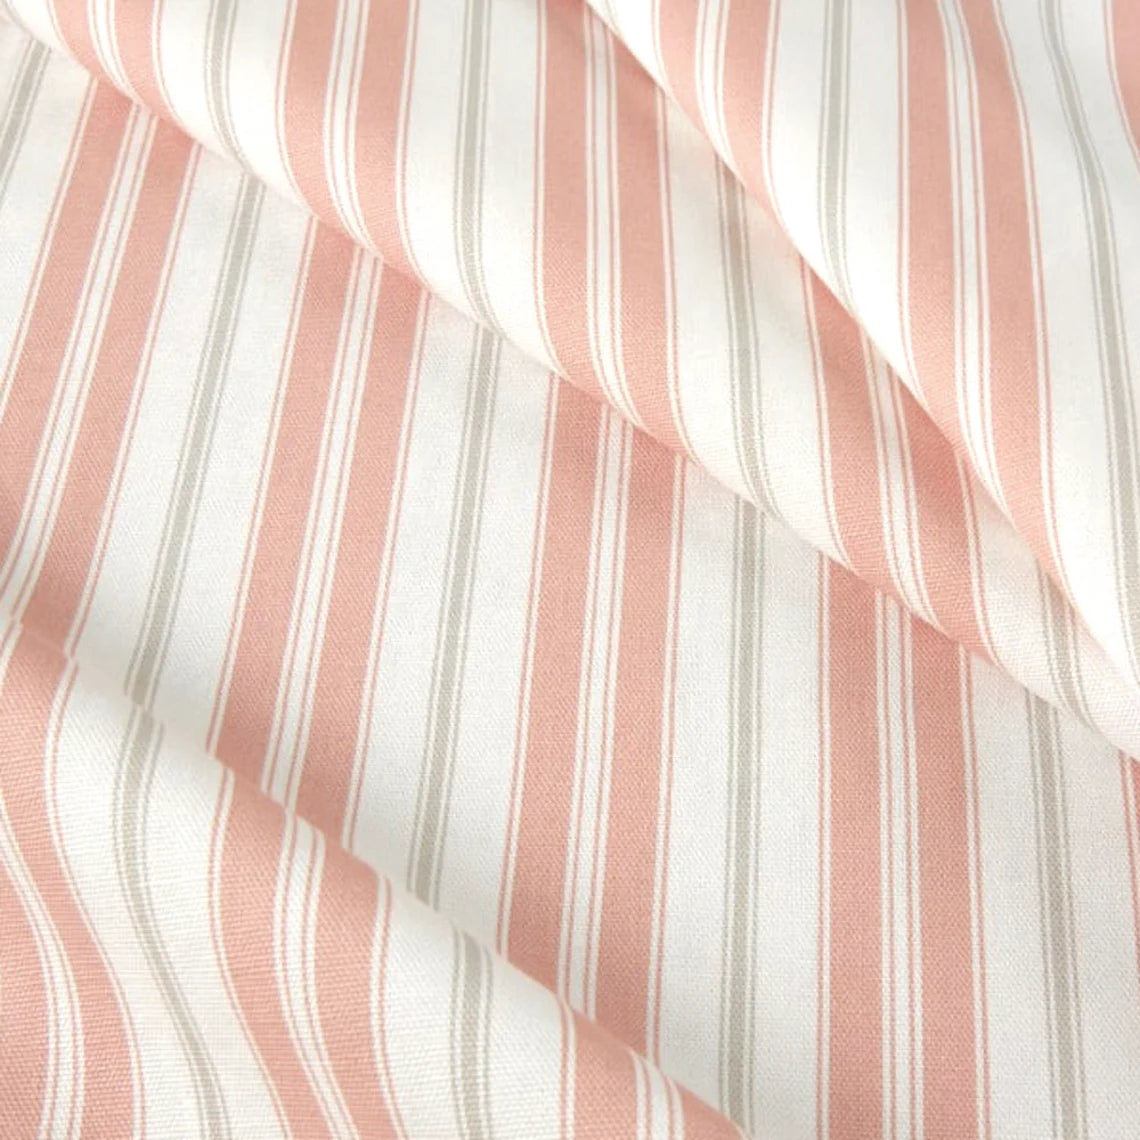 duvet cover in newbury blush stripe- pink, gray, white